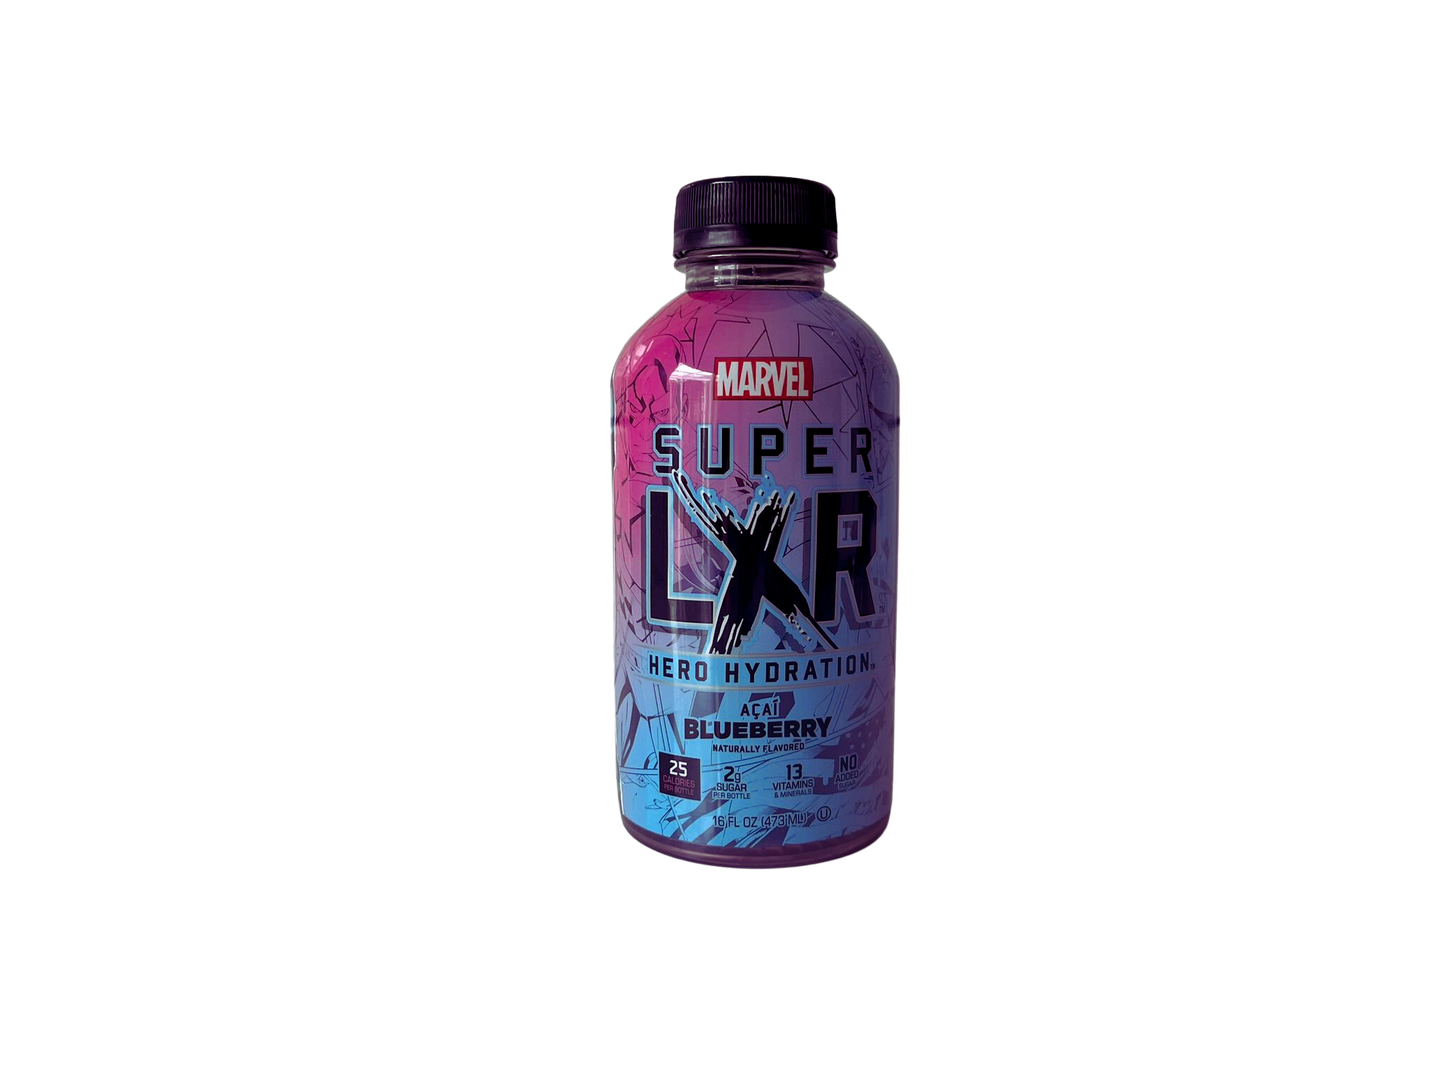 MARVEL Super LXR Hero Hydration Drink Special Deal